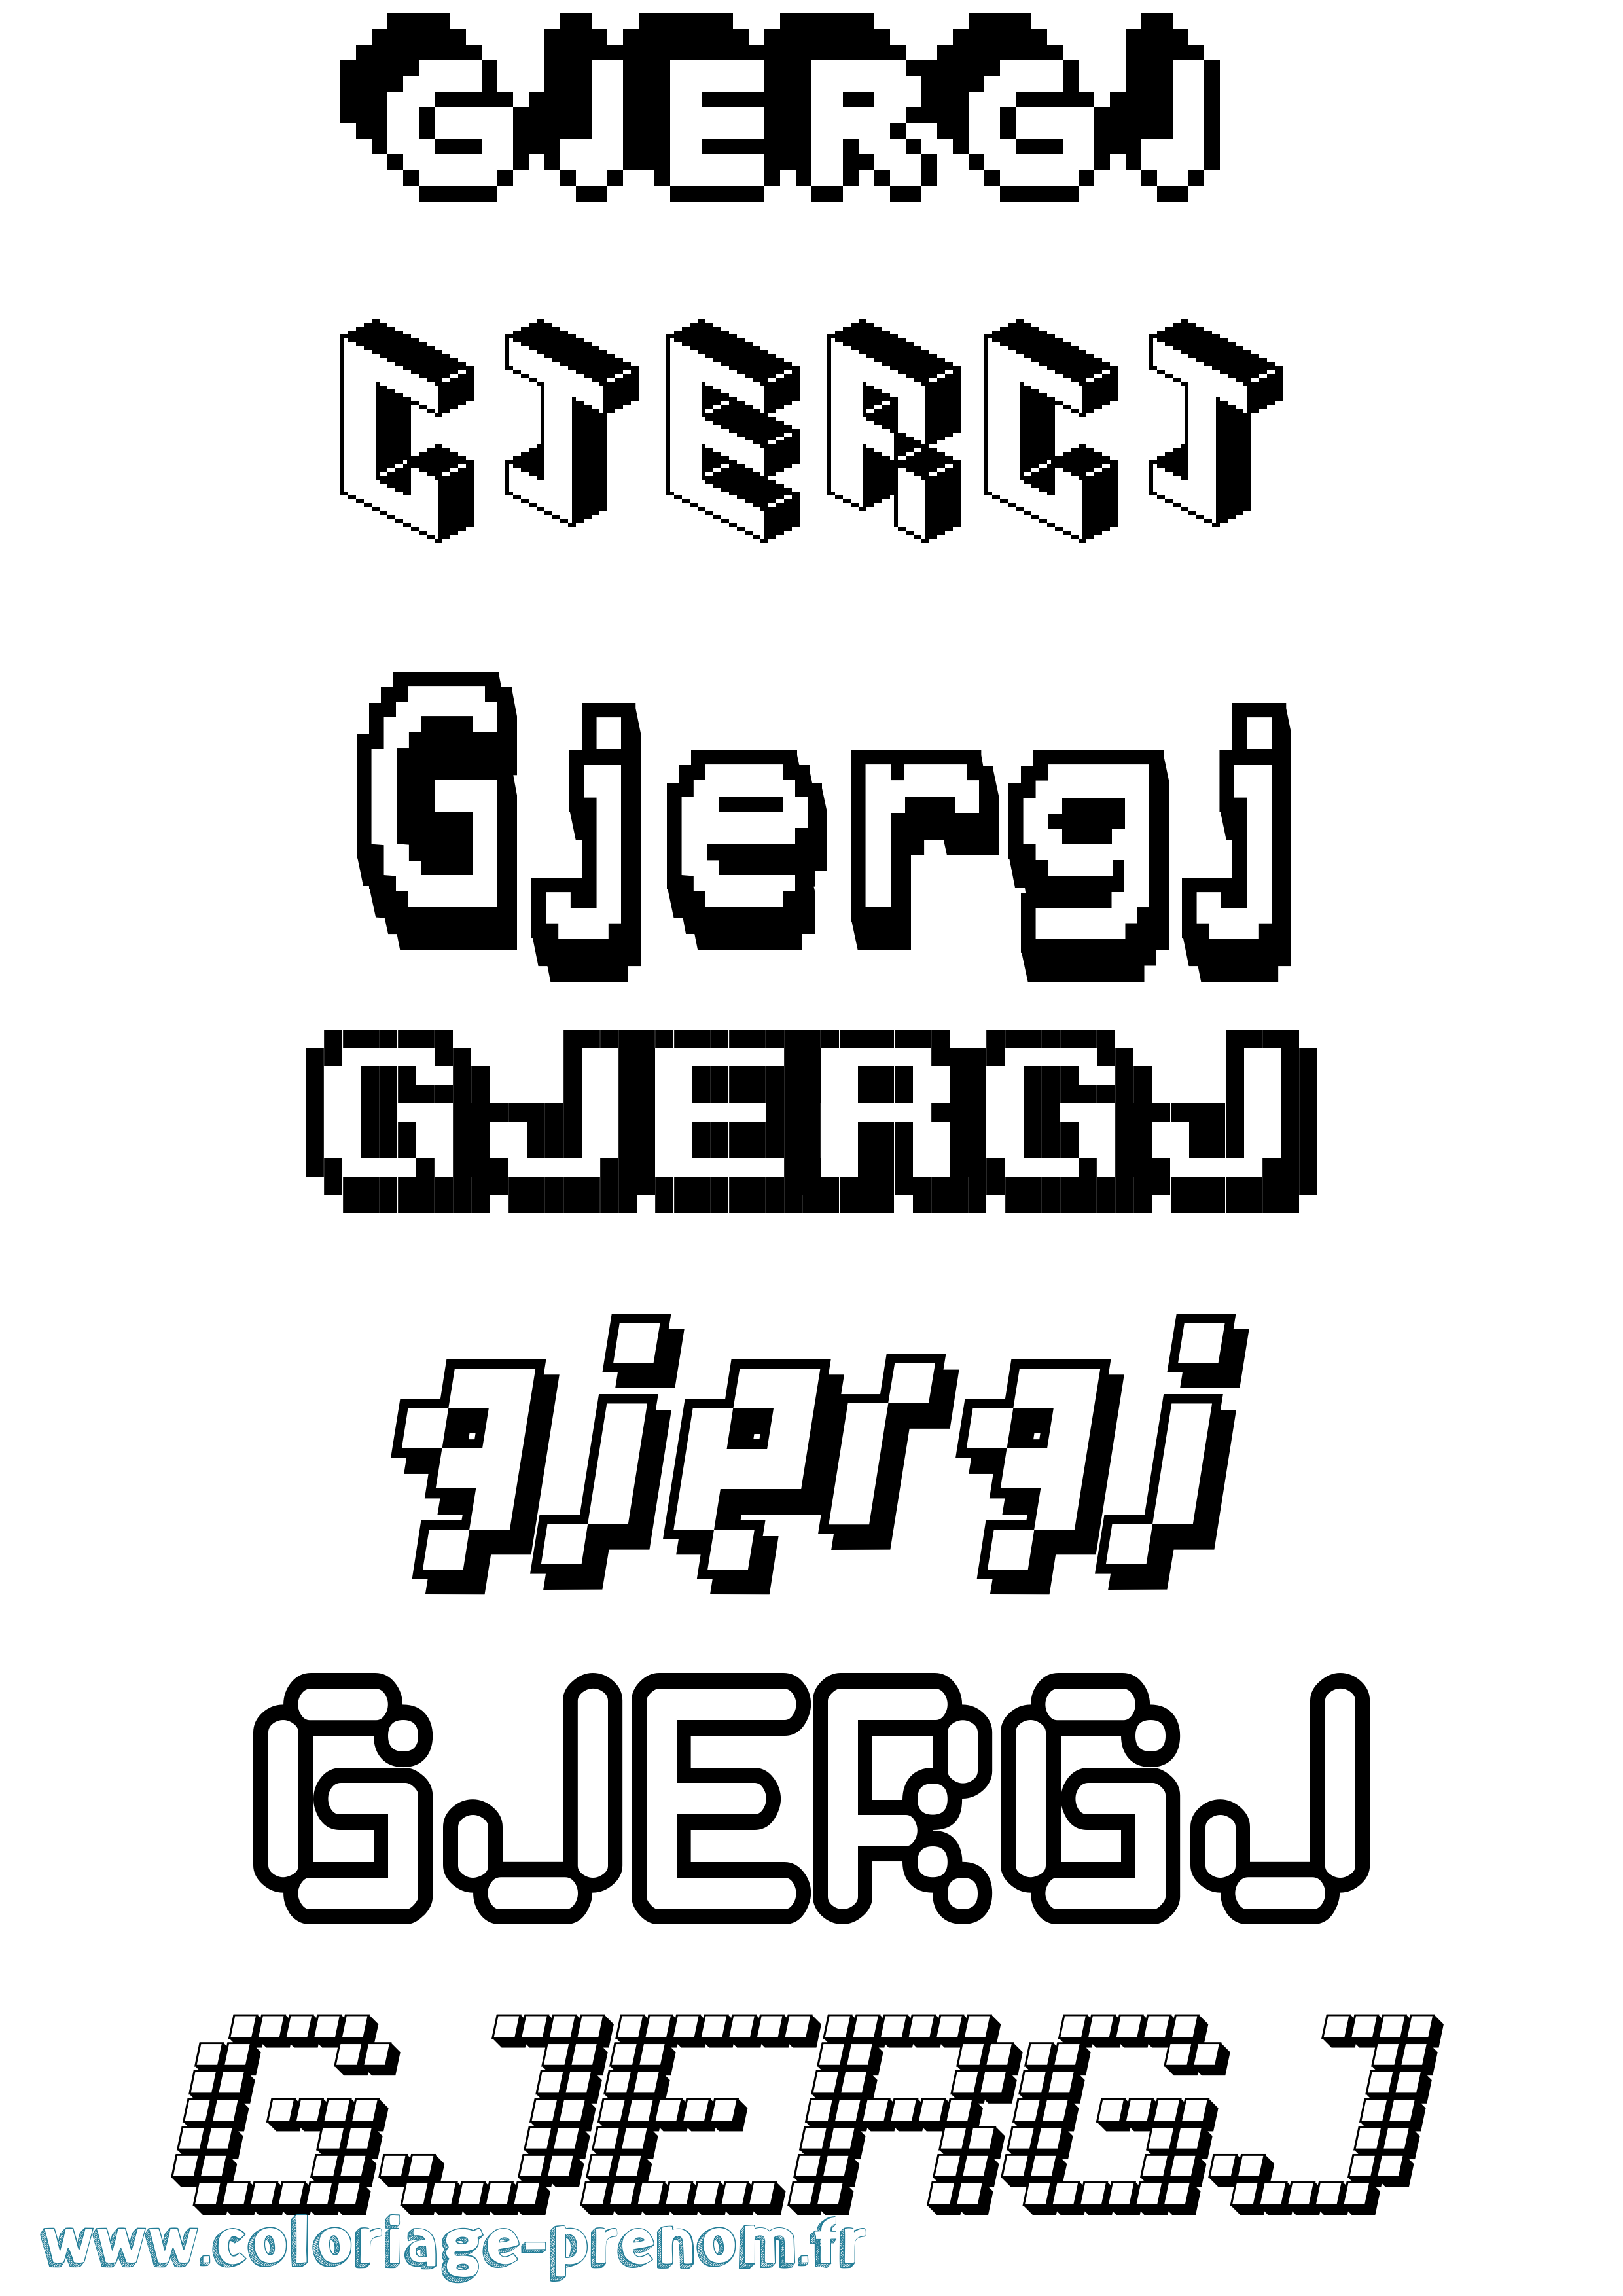 Coloriage prénom Gjergj Pixel